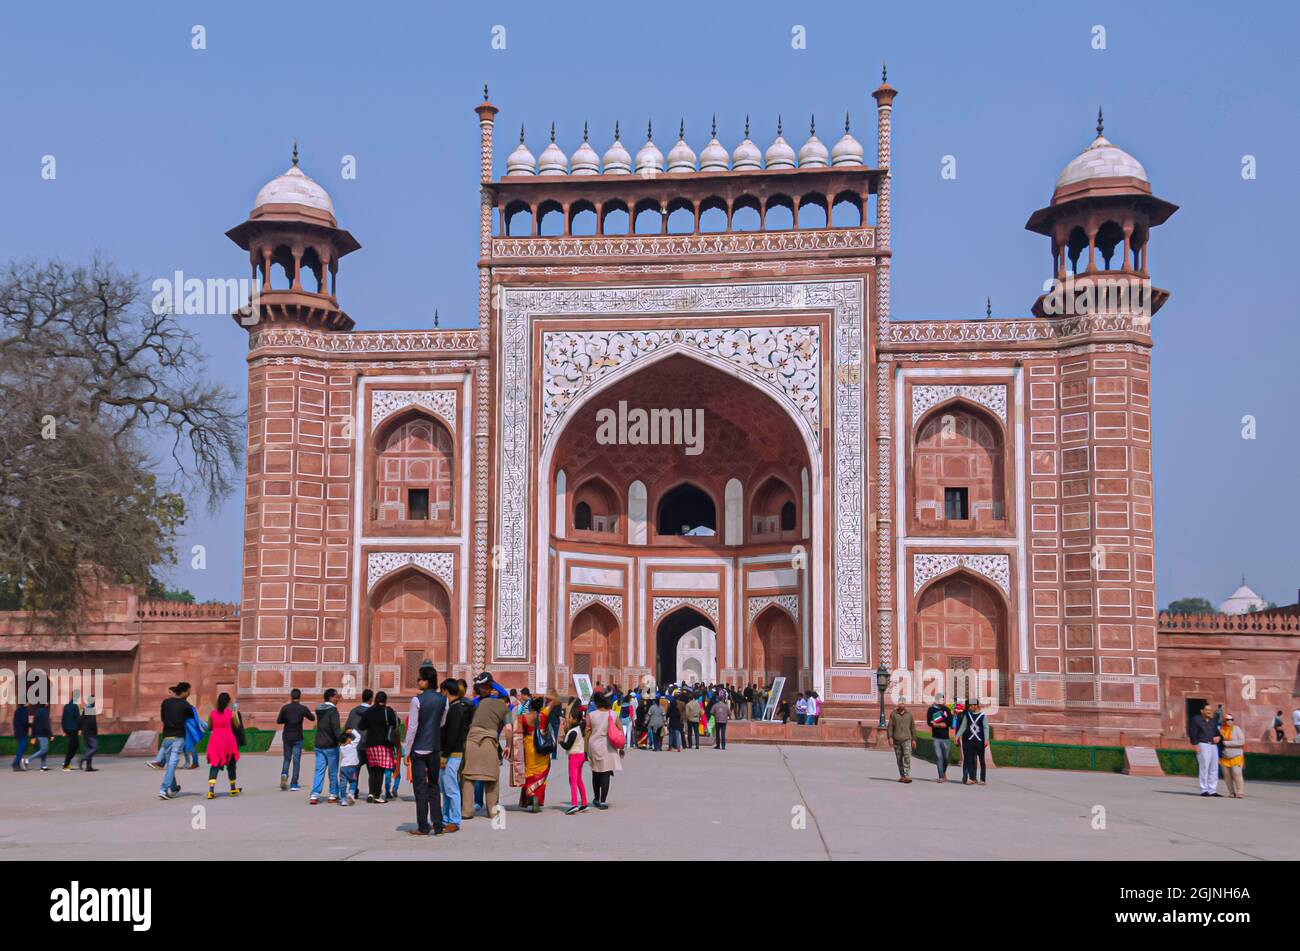 Vue sur la Grande porte appelée 'Darwaza-i-rauza' menant au complexe Taj Mahal. Banque D'Images